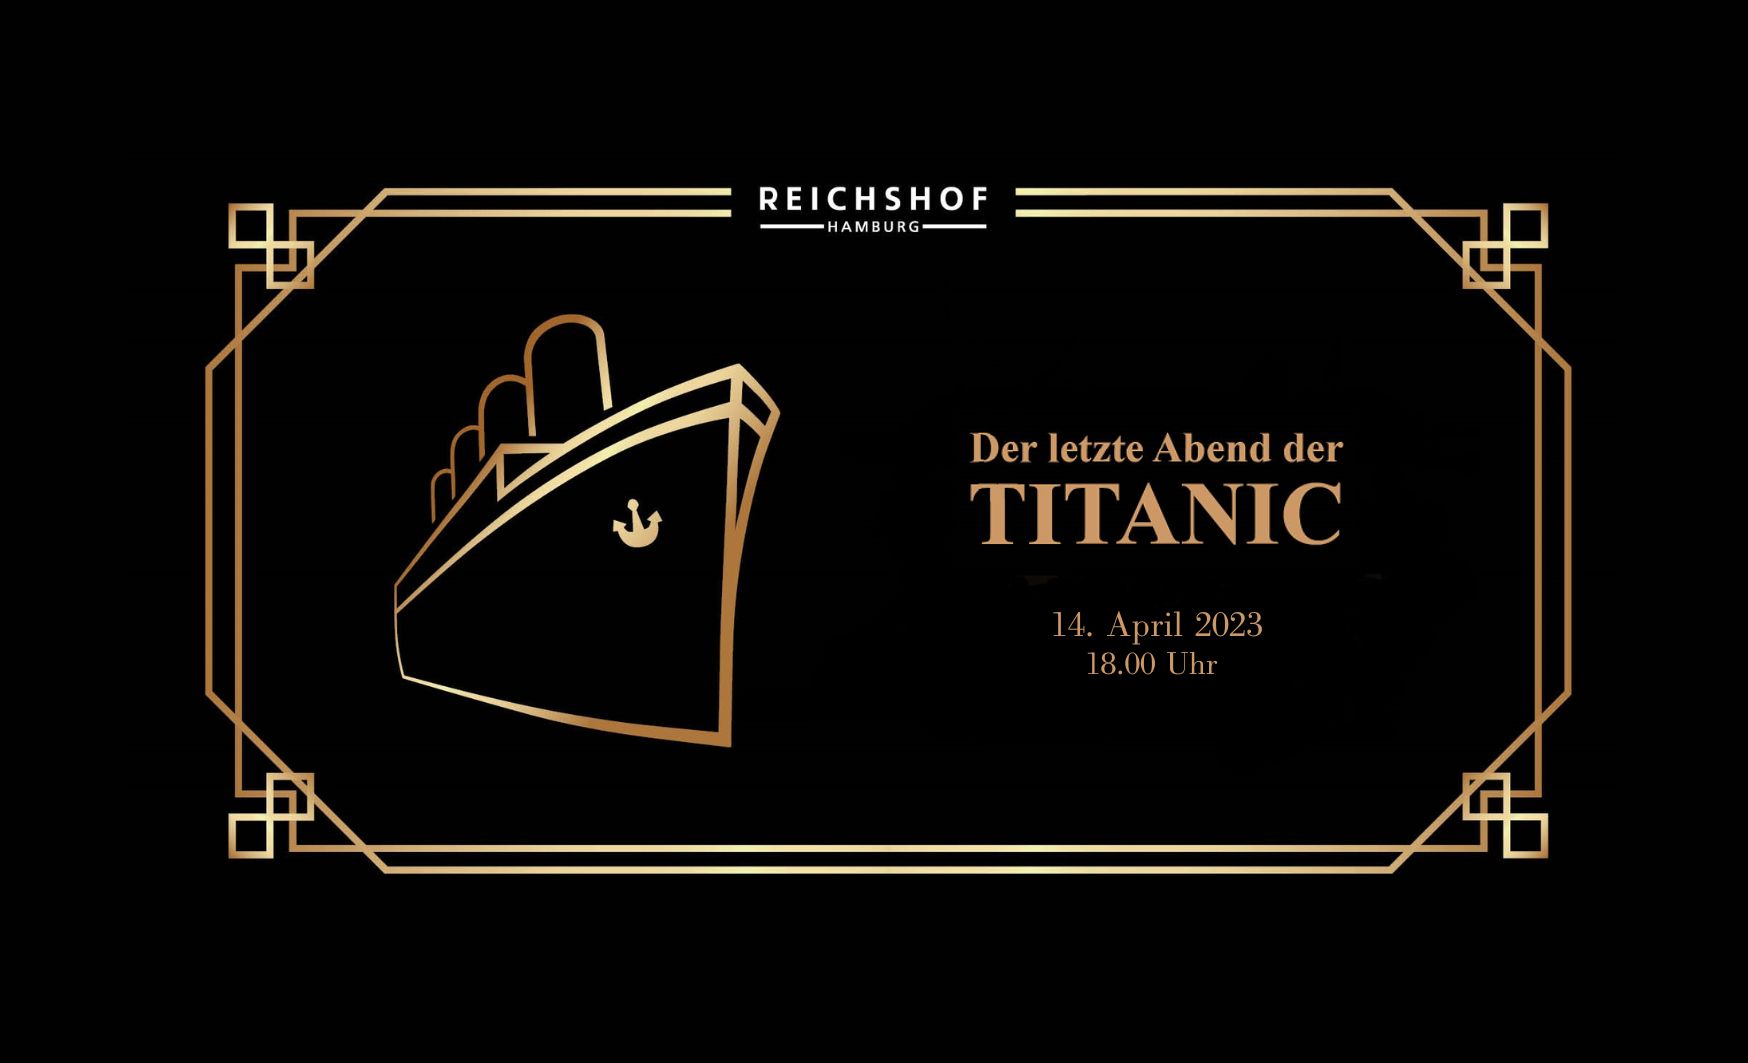 reichshof-hamburg-titanic-dinner-14-april-2023